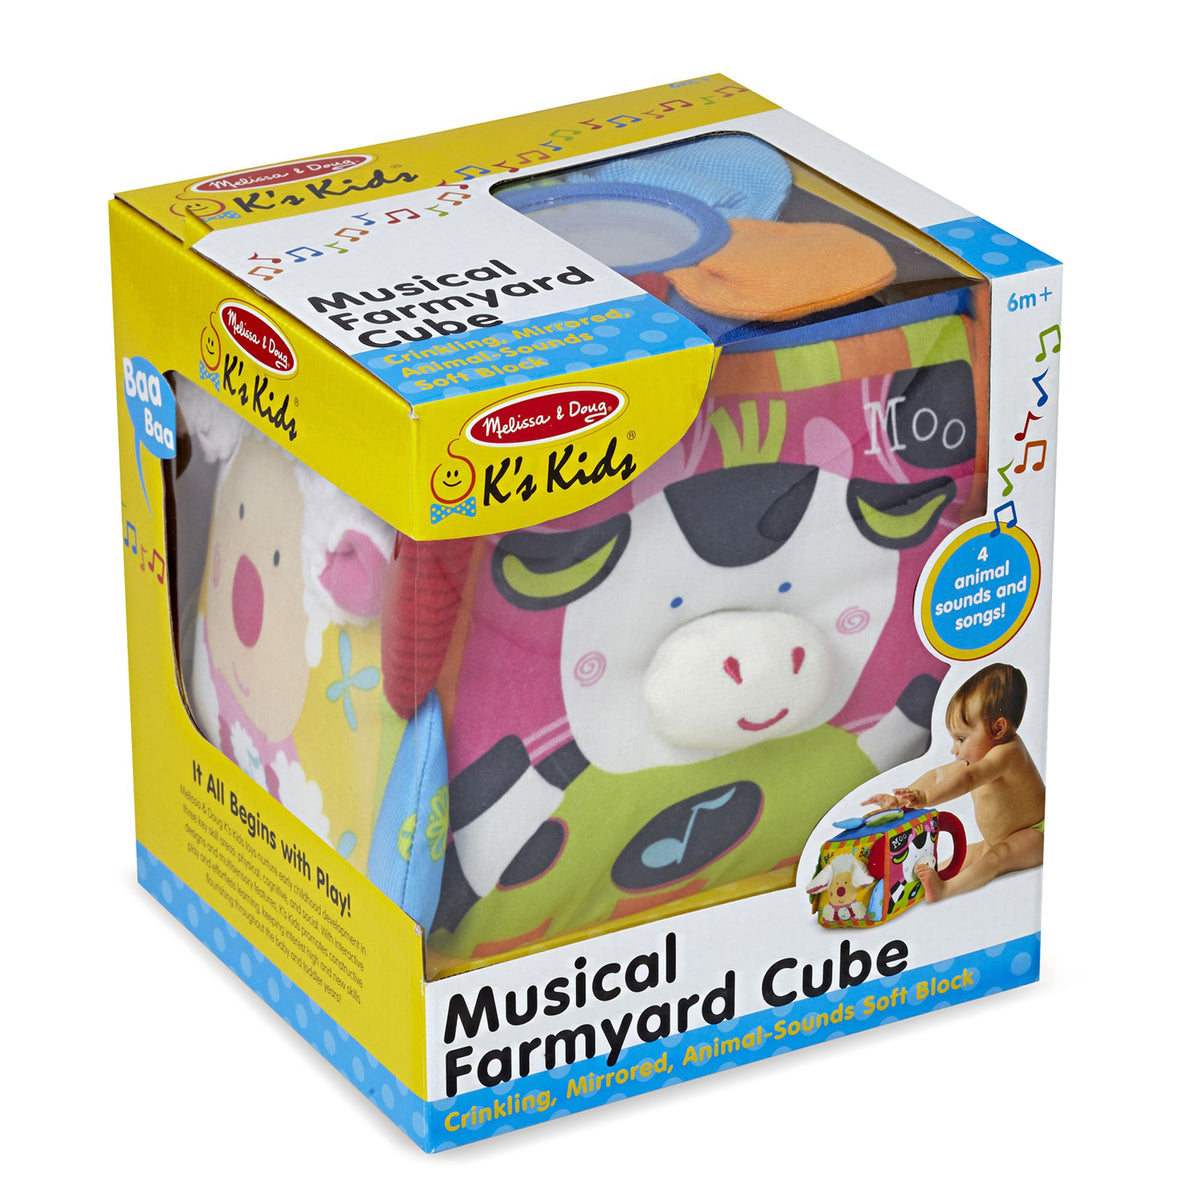 Melissa & Doug 9177 Musical Farmyard Cube Learning Toy, 6+ Months